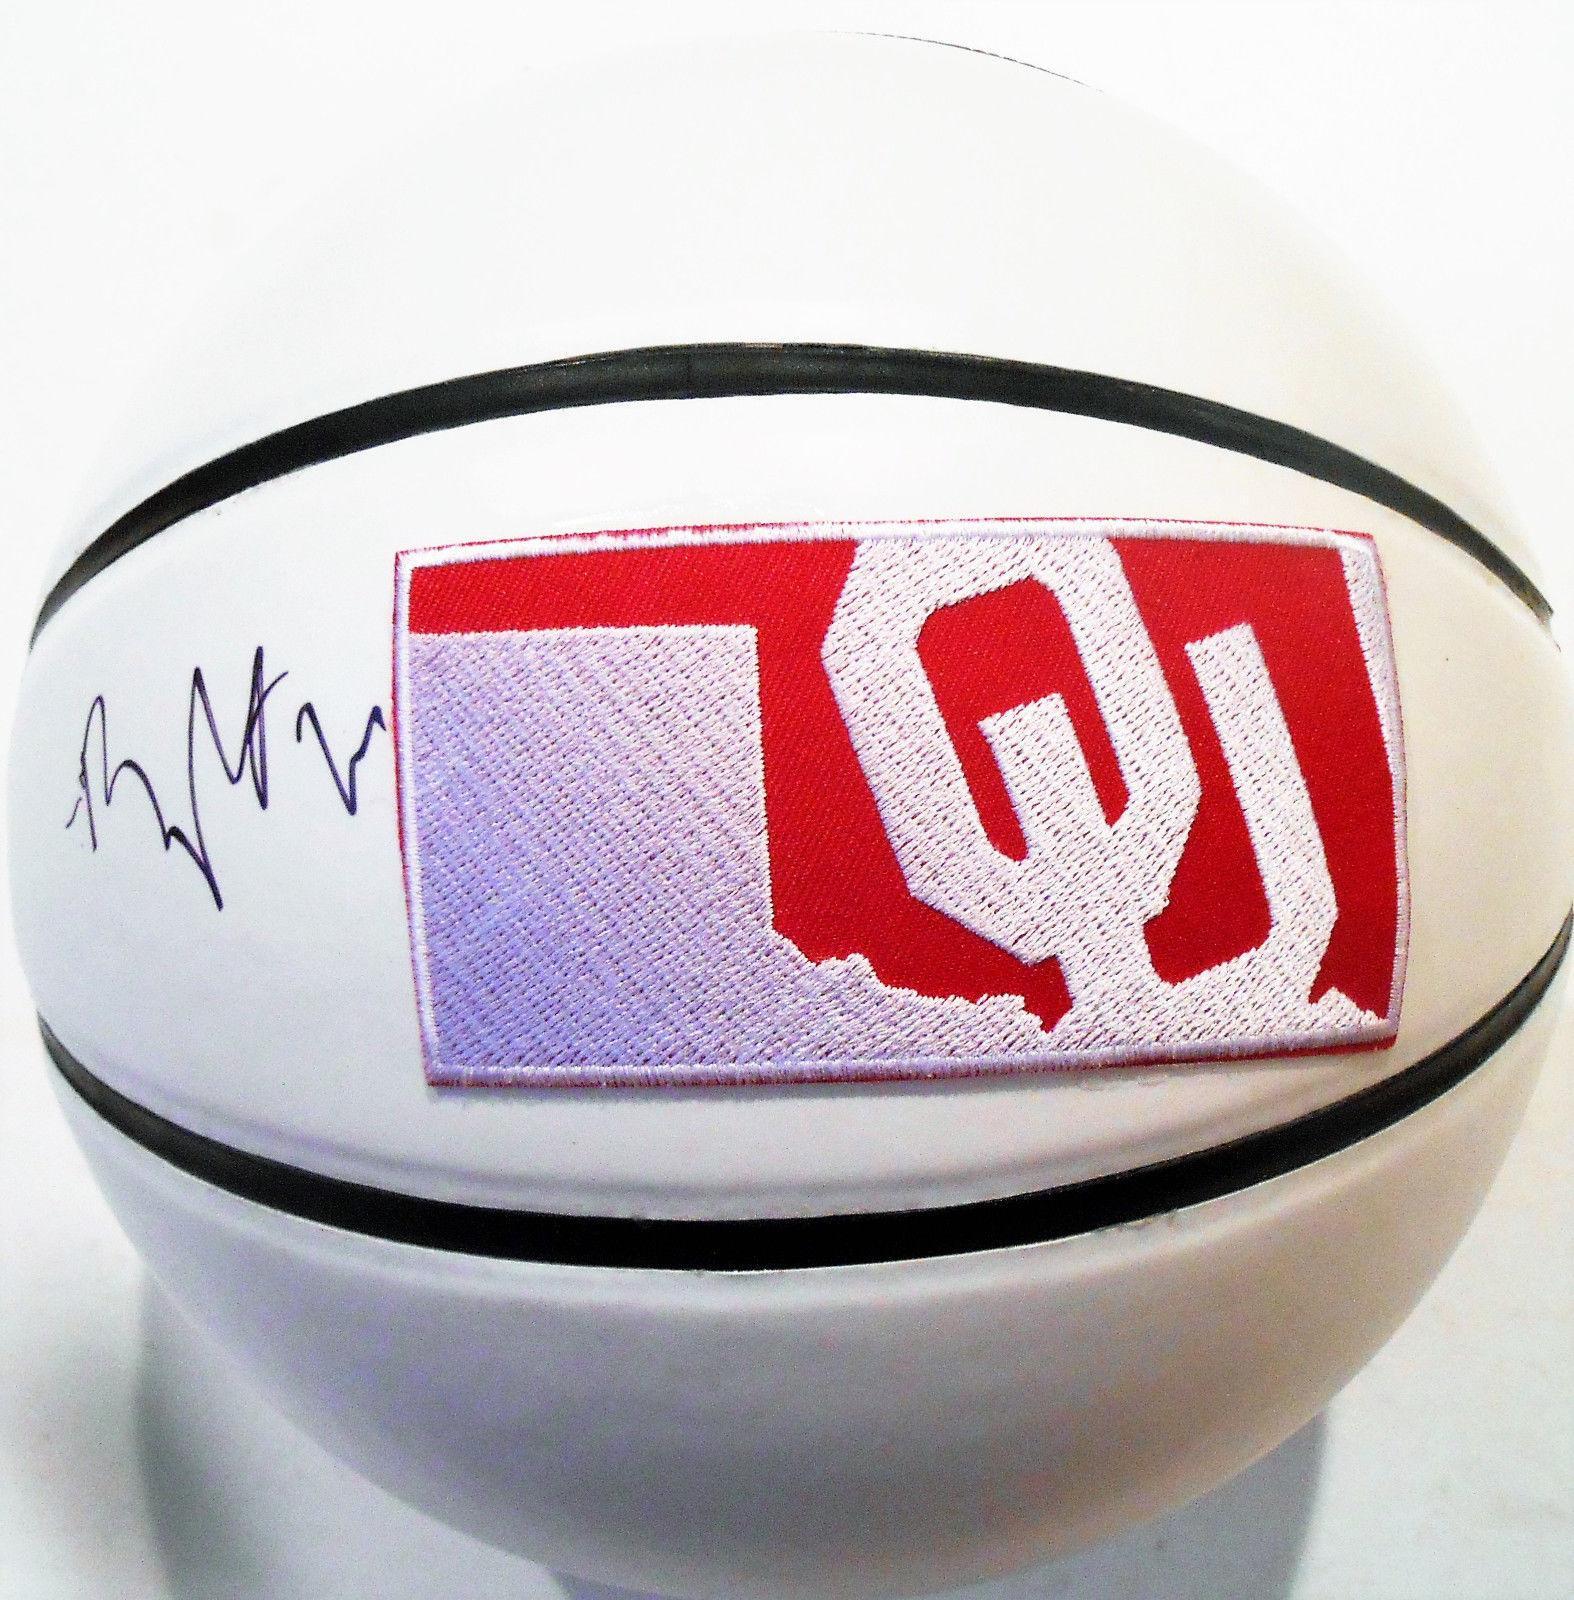 Sooners Logo - Buddy Hield Signed Oklahoma Sooners Logo Basketball W JSA COA SD19137